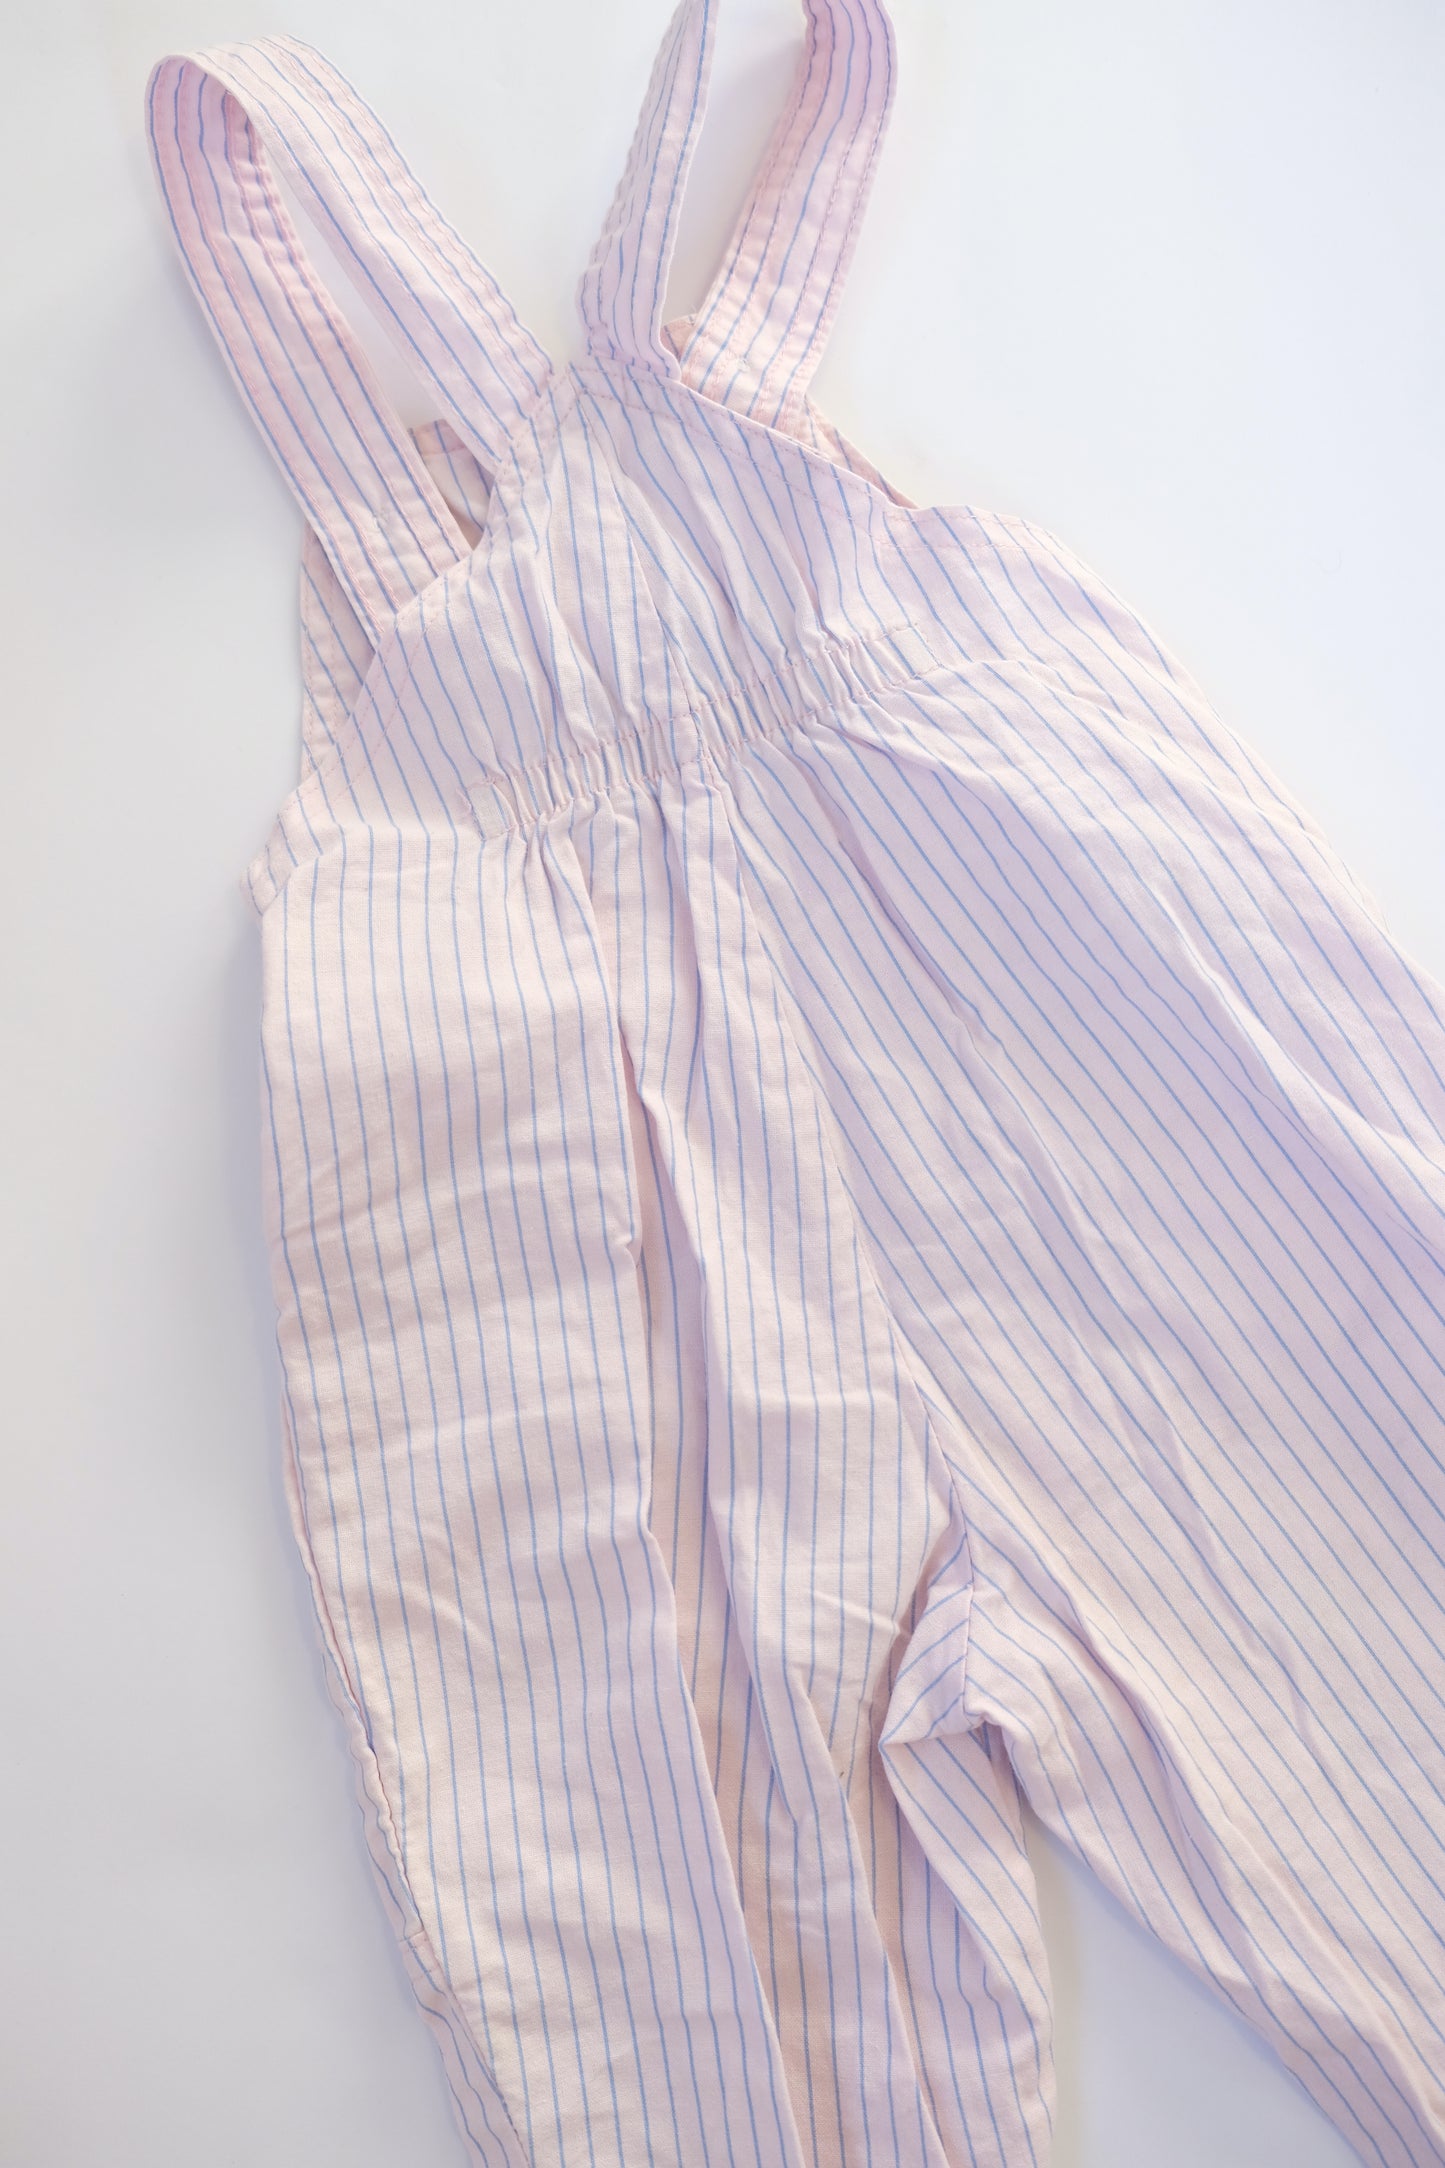 Vintage pink stripe overalls 6months